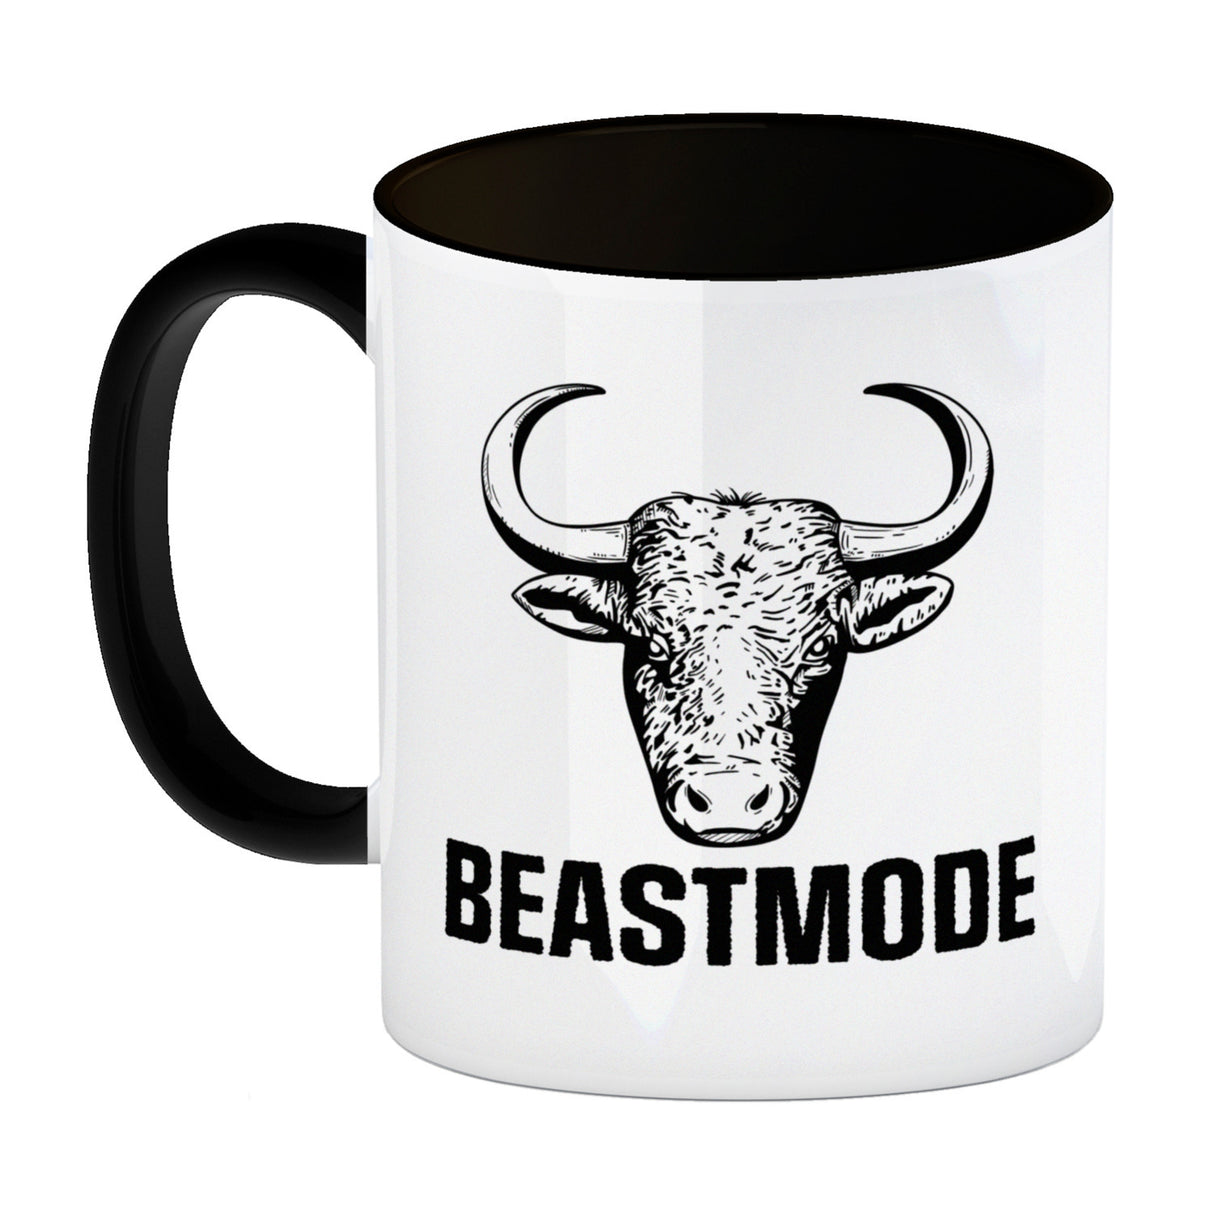 Beastmode Fitness Kaffeebecher mit Stier